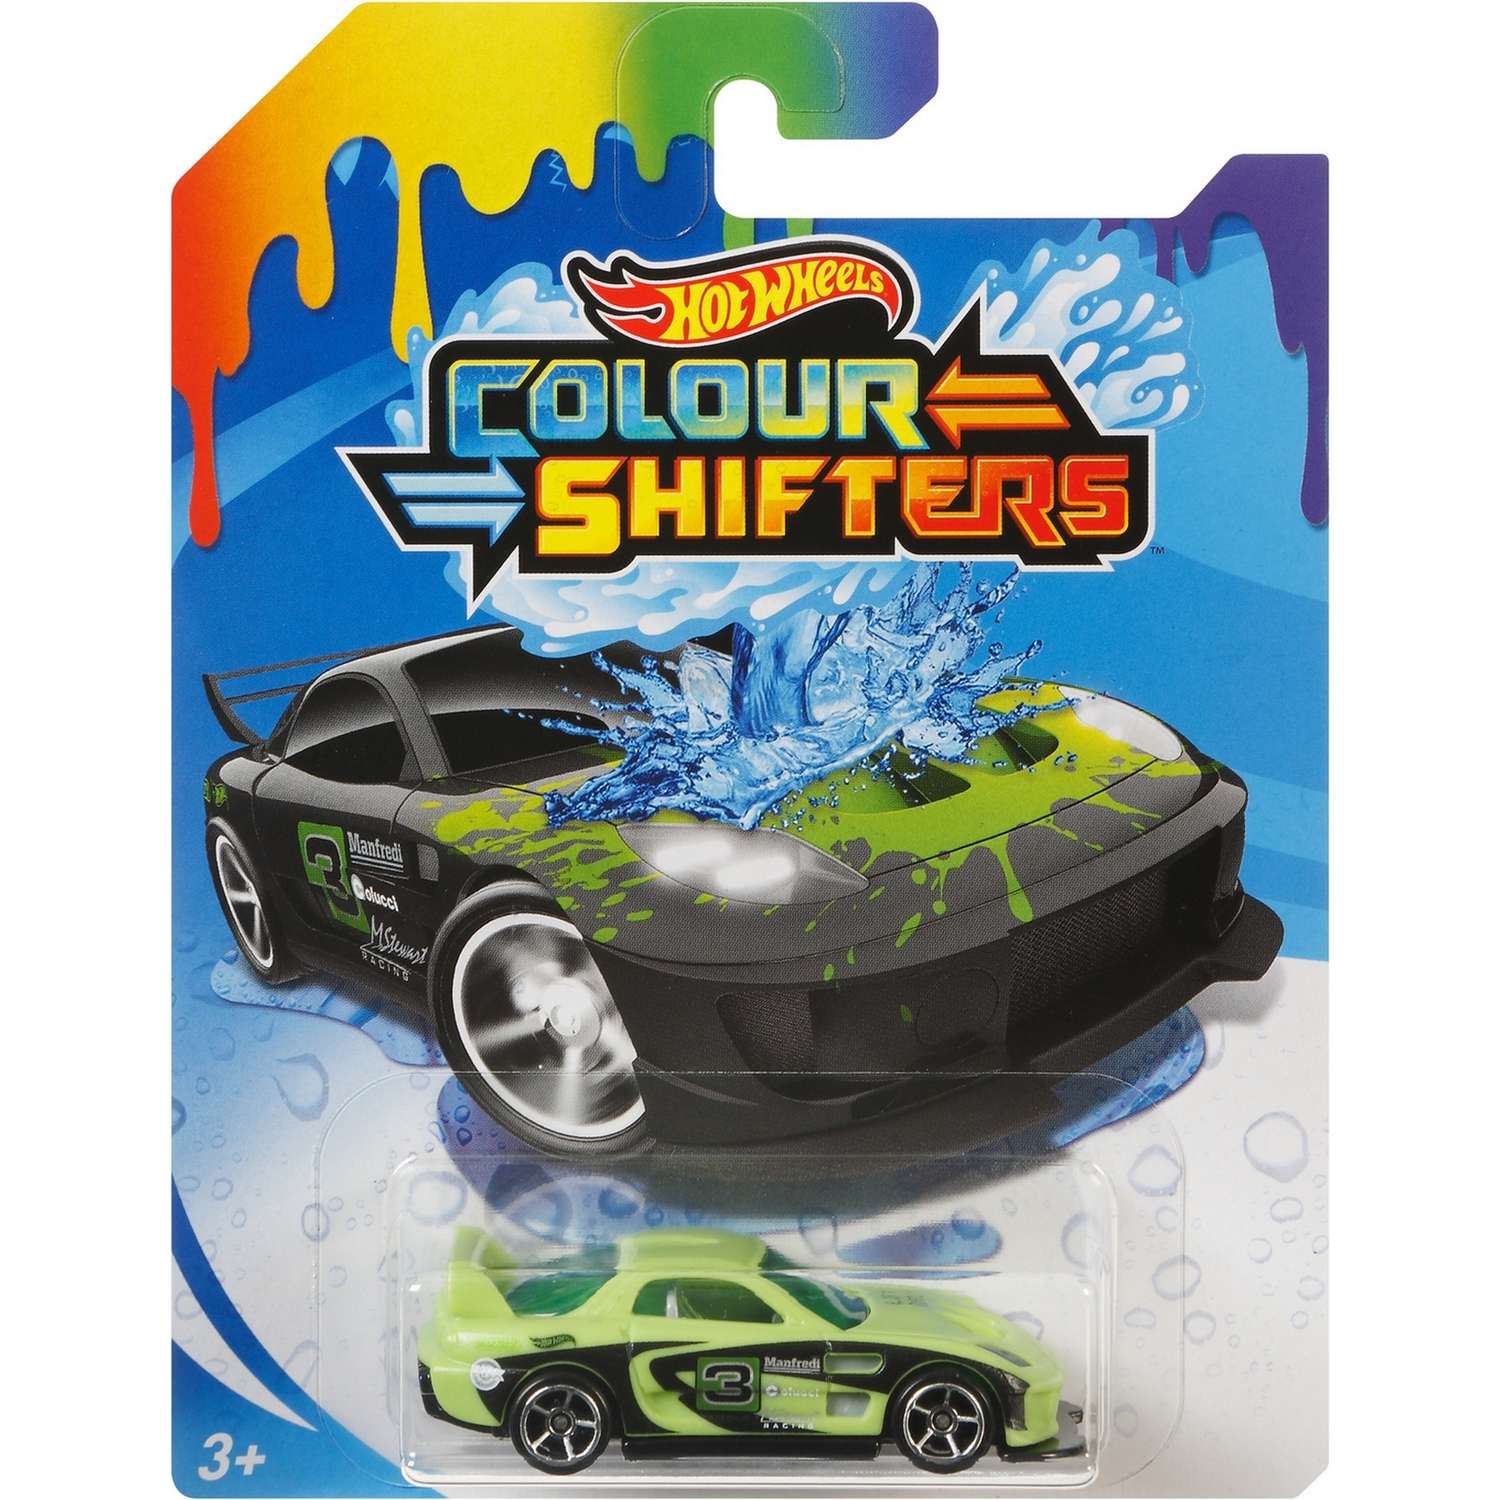 Машинки Hot Wheels меняющие цвет серия Colour Shifters 1:64 в ассортименте BHR15 - фото 146